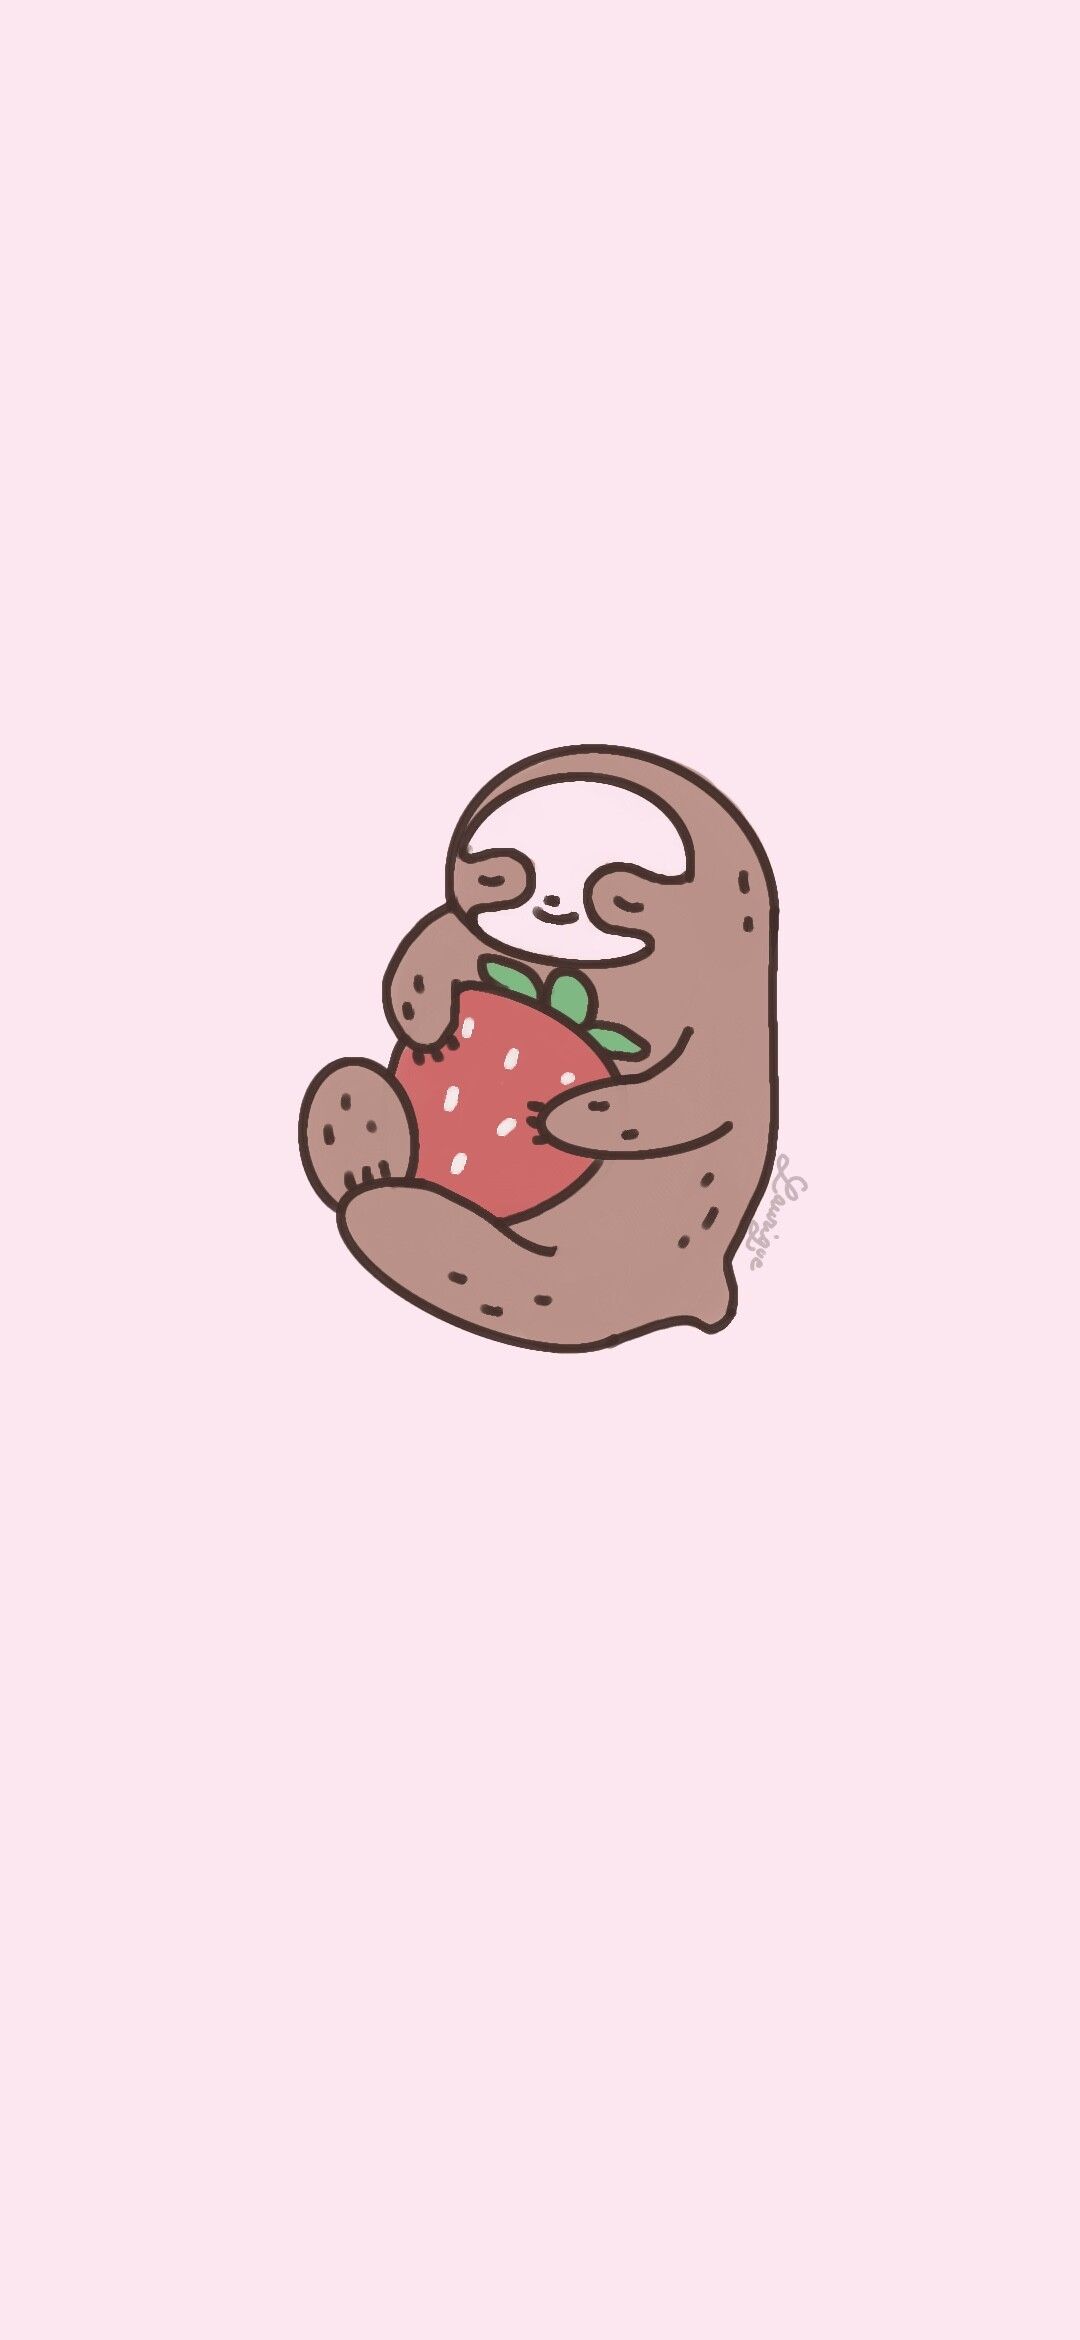 Strawberry sloth